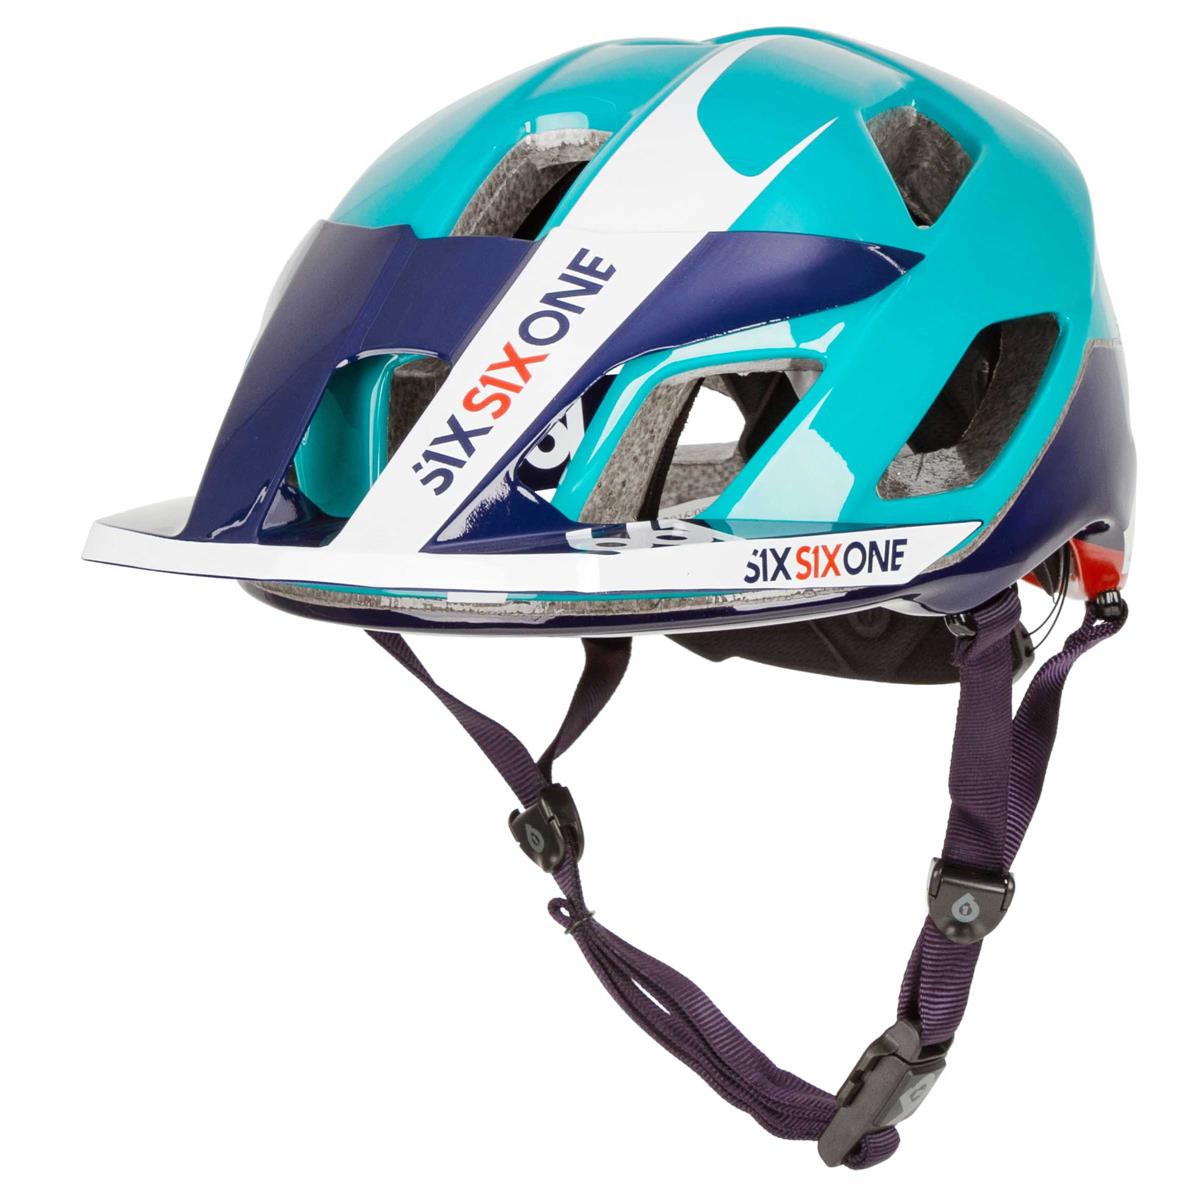 SixSixOne Enduro MTB Helmet Evo AM Orange/Blau